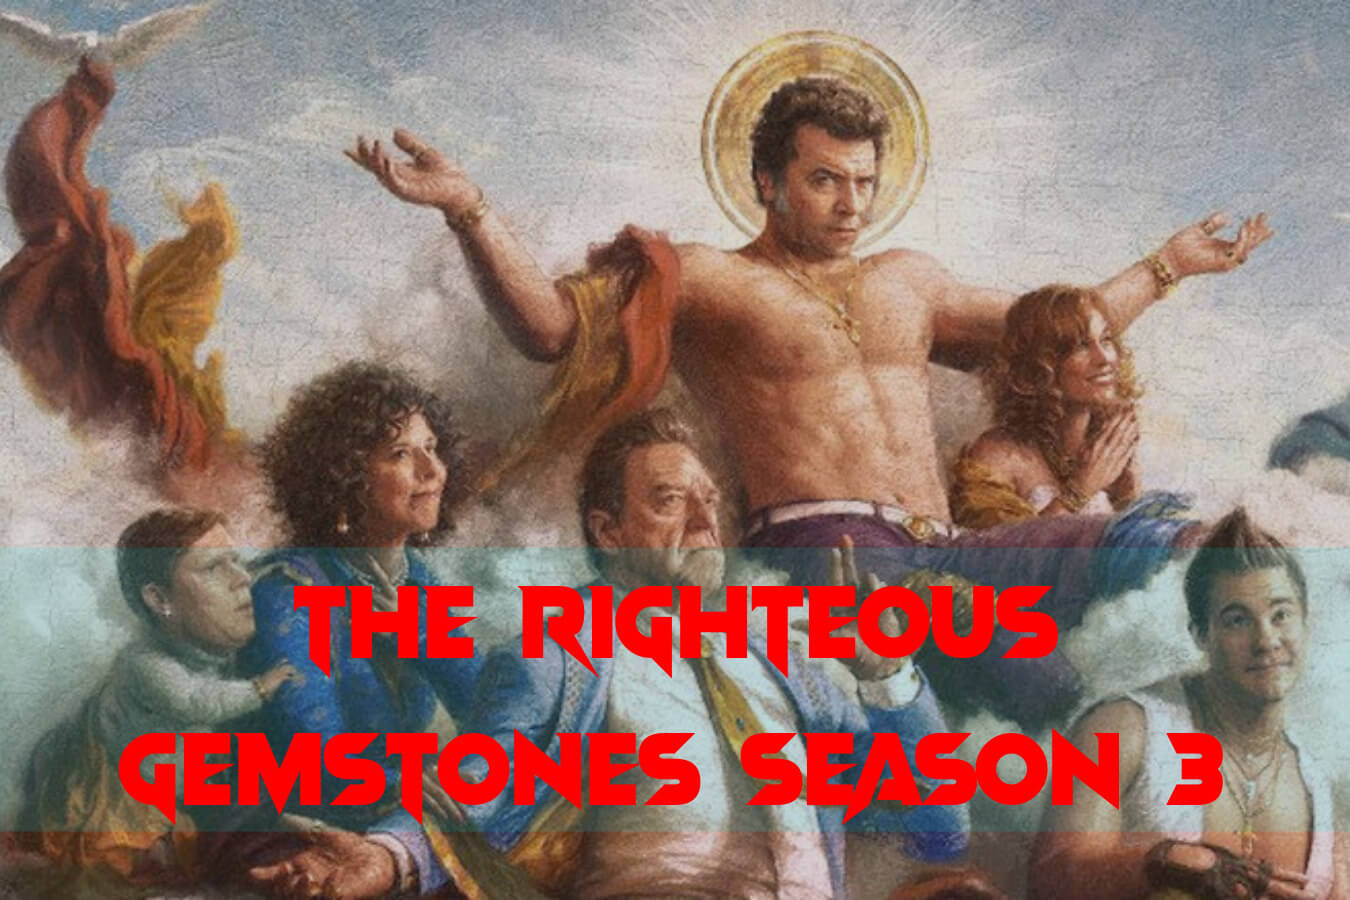 The Righteous Gemstones Season 3 plot